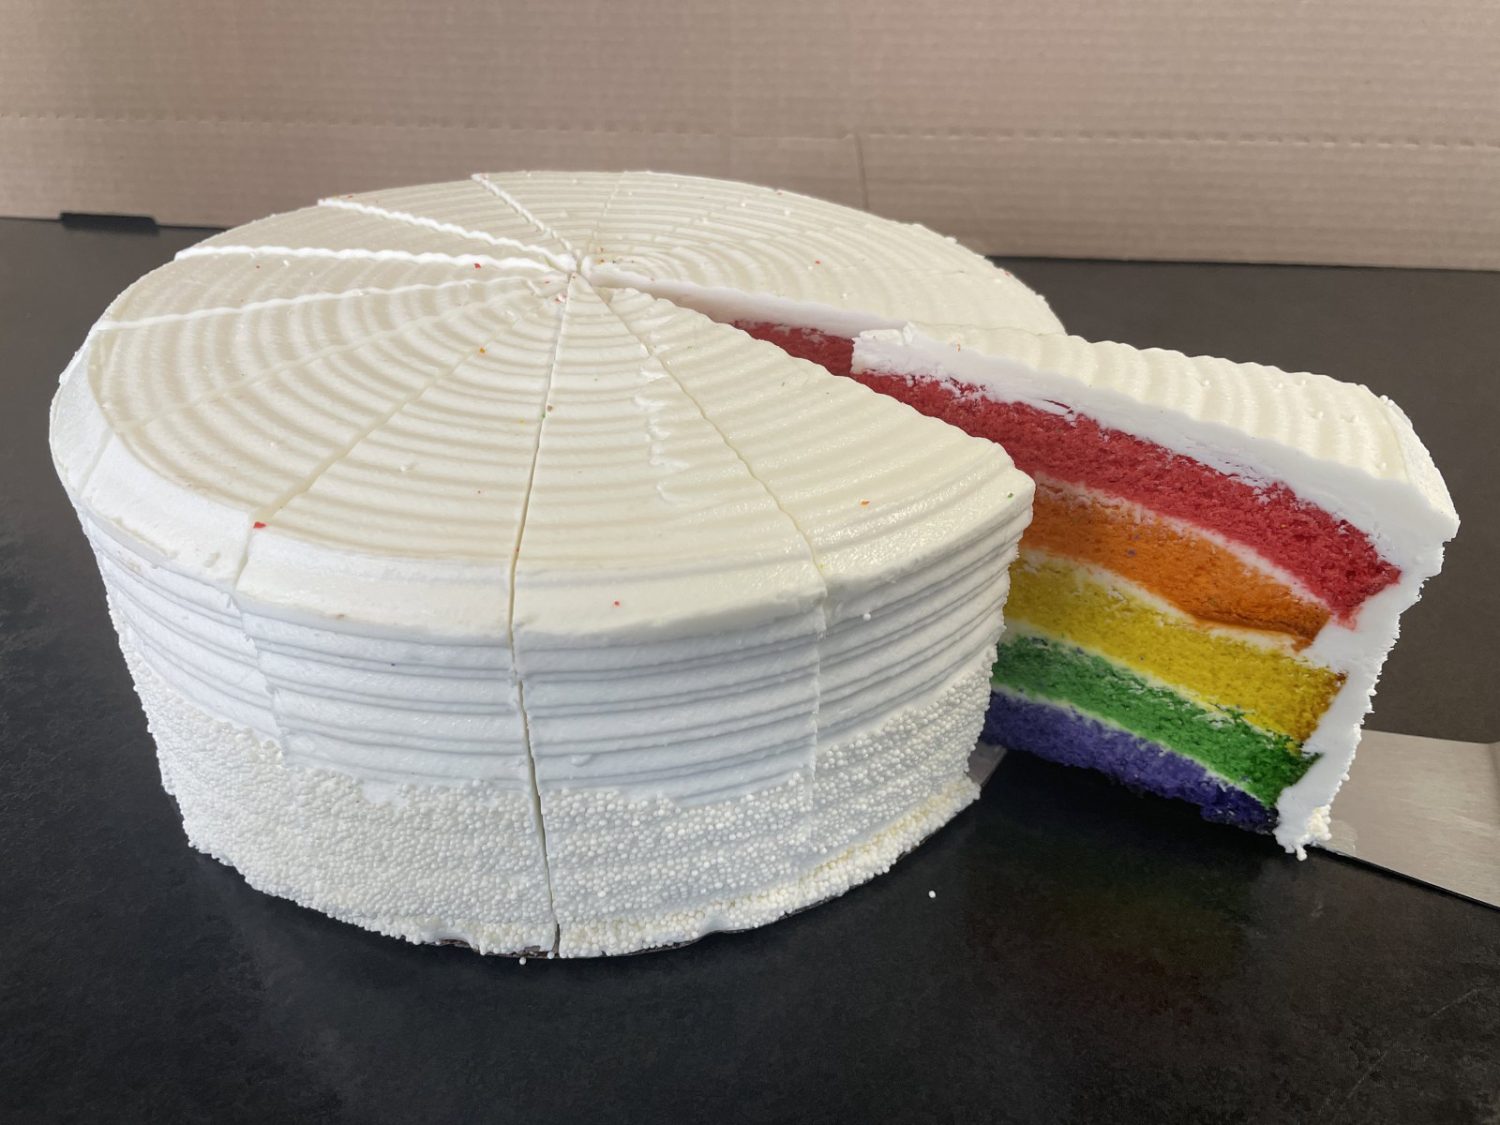 https://livoniabakeryandcafe.com/wp-content/uploads/photo-gallery/Rainbow-Cake-2_(1).jpg?bwg=1689729418